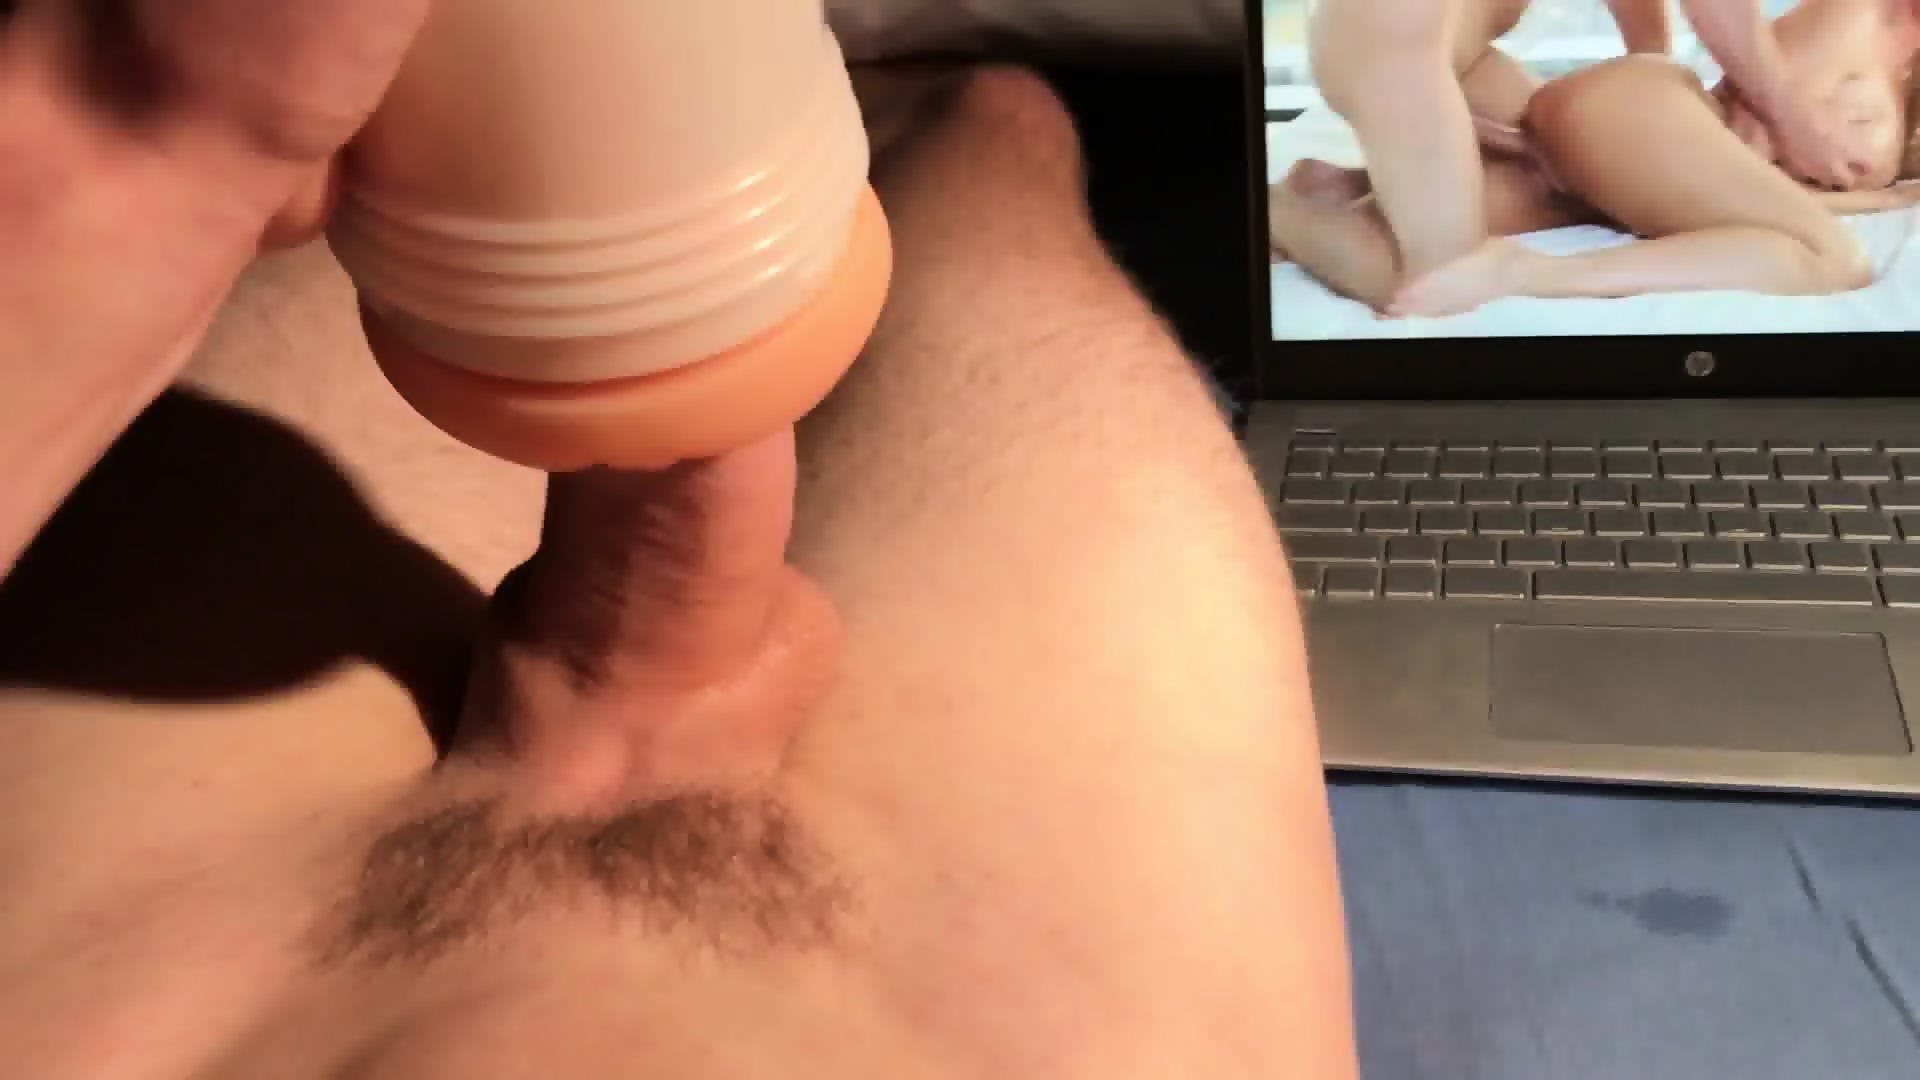 masturbating porn video watching Clip while